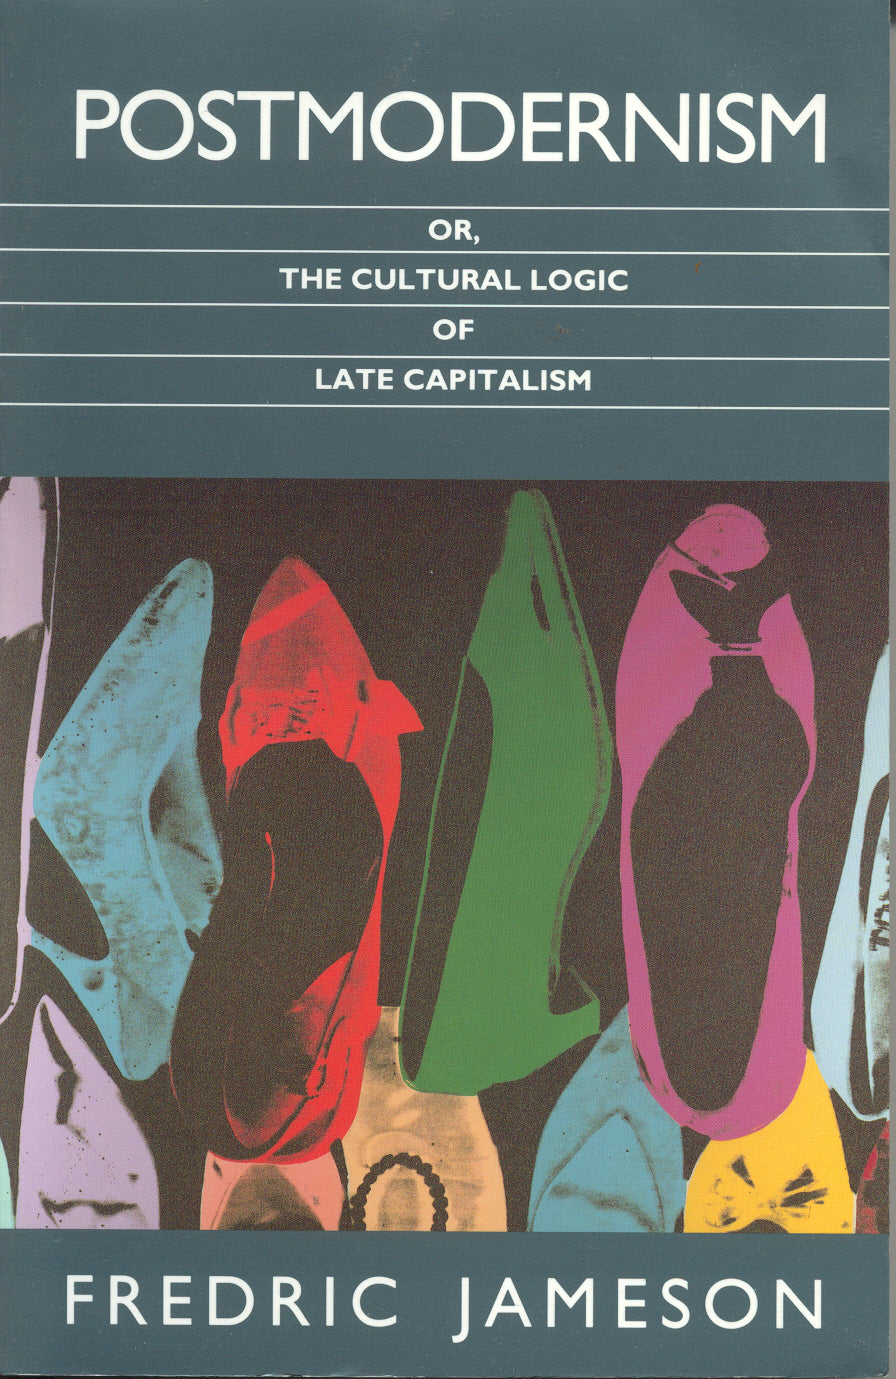 Postmodernism or, the Cultural Logic of Late Capitalism ร้านหนังสือและสิ่งของ เป็นร้านหนังสือภาษาอังกฤษหายาก และร้านกาแฟ หรือ บุ๊คคาเฟ่ ตั้งอยู่สุขุมวิท กรุงเทพ